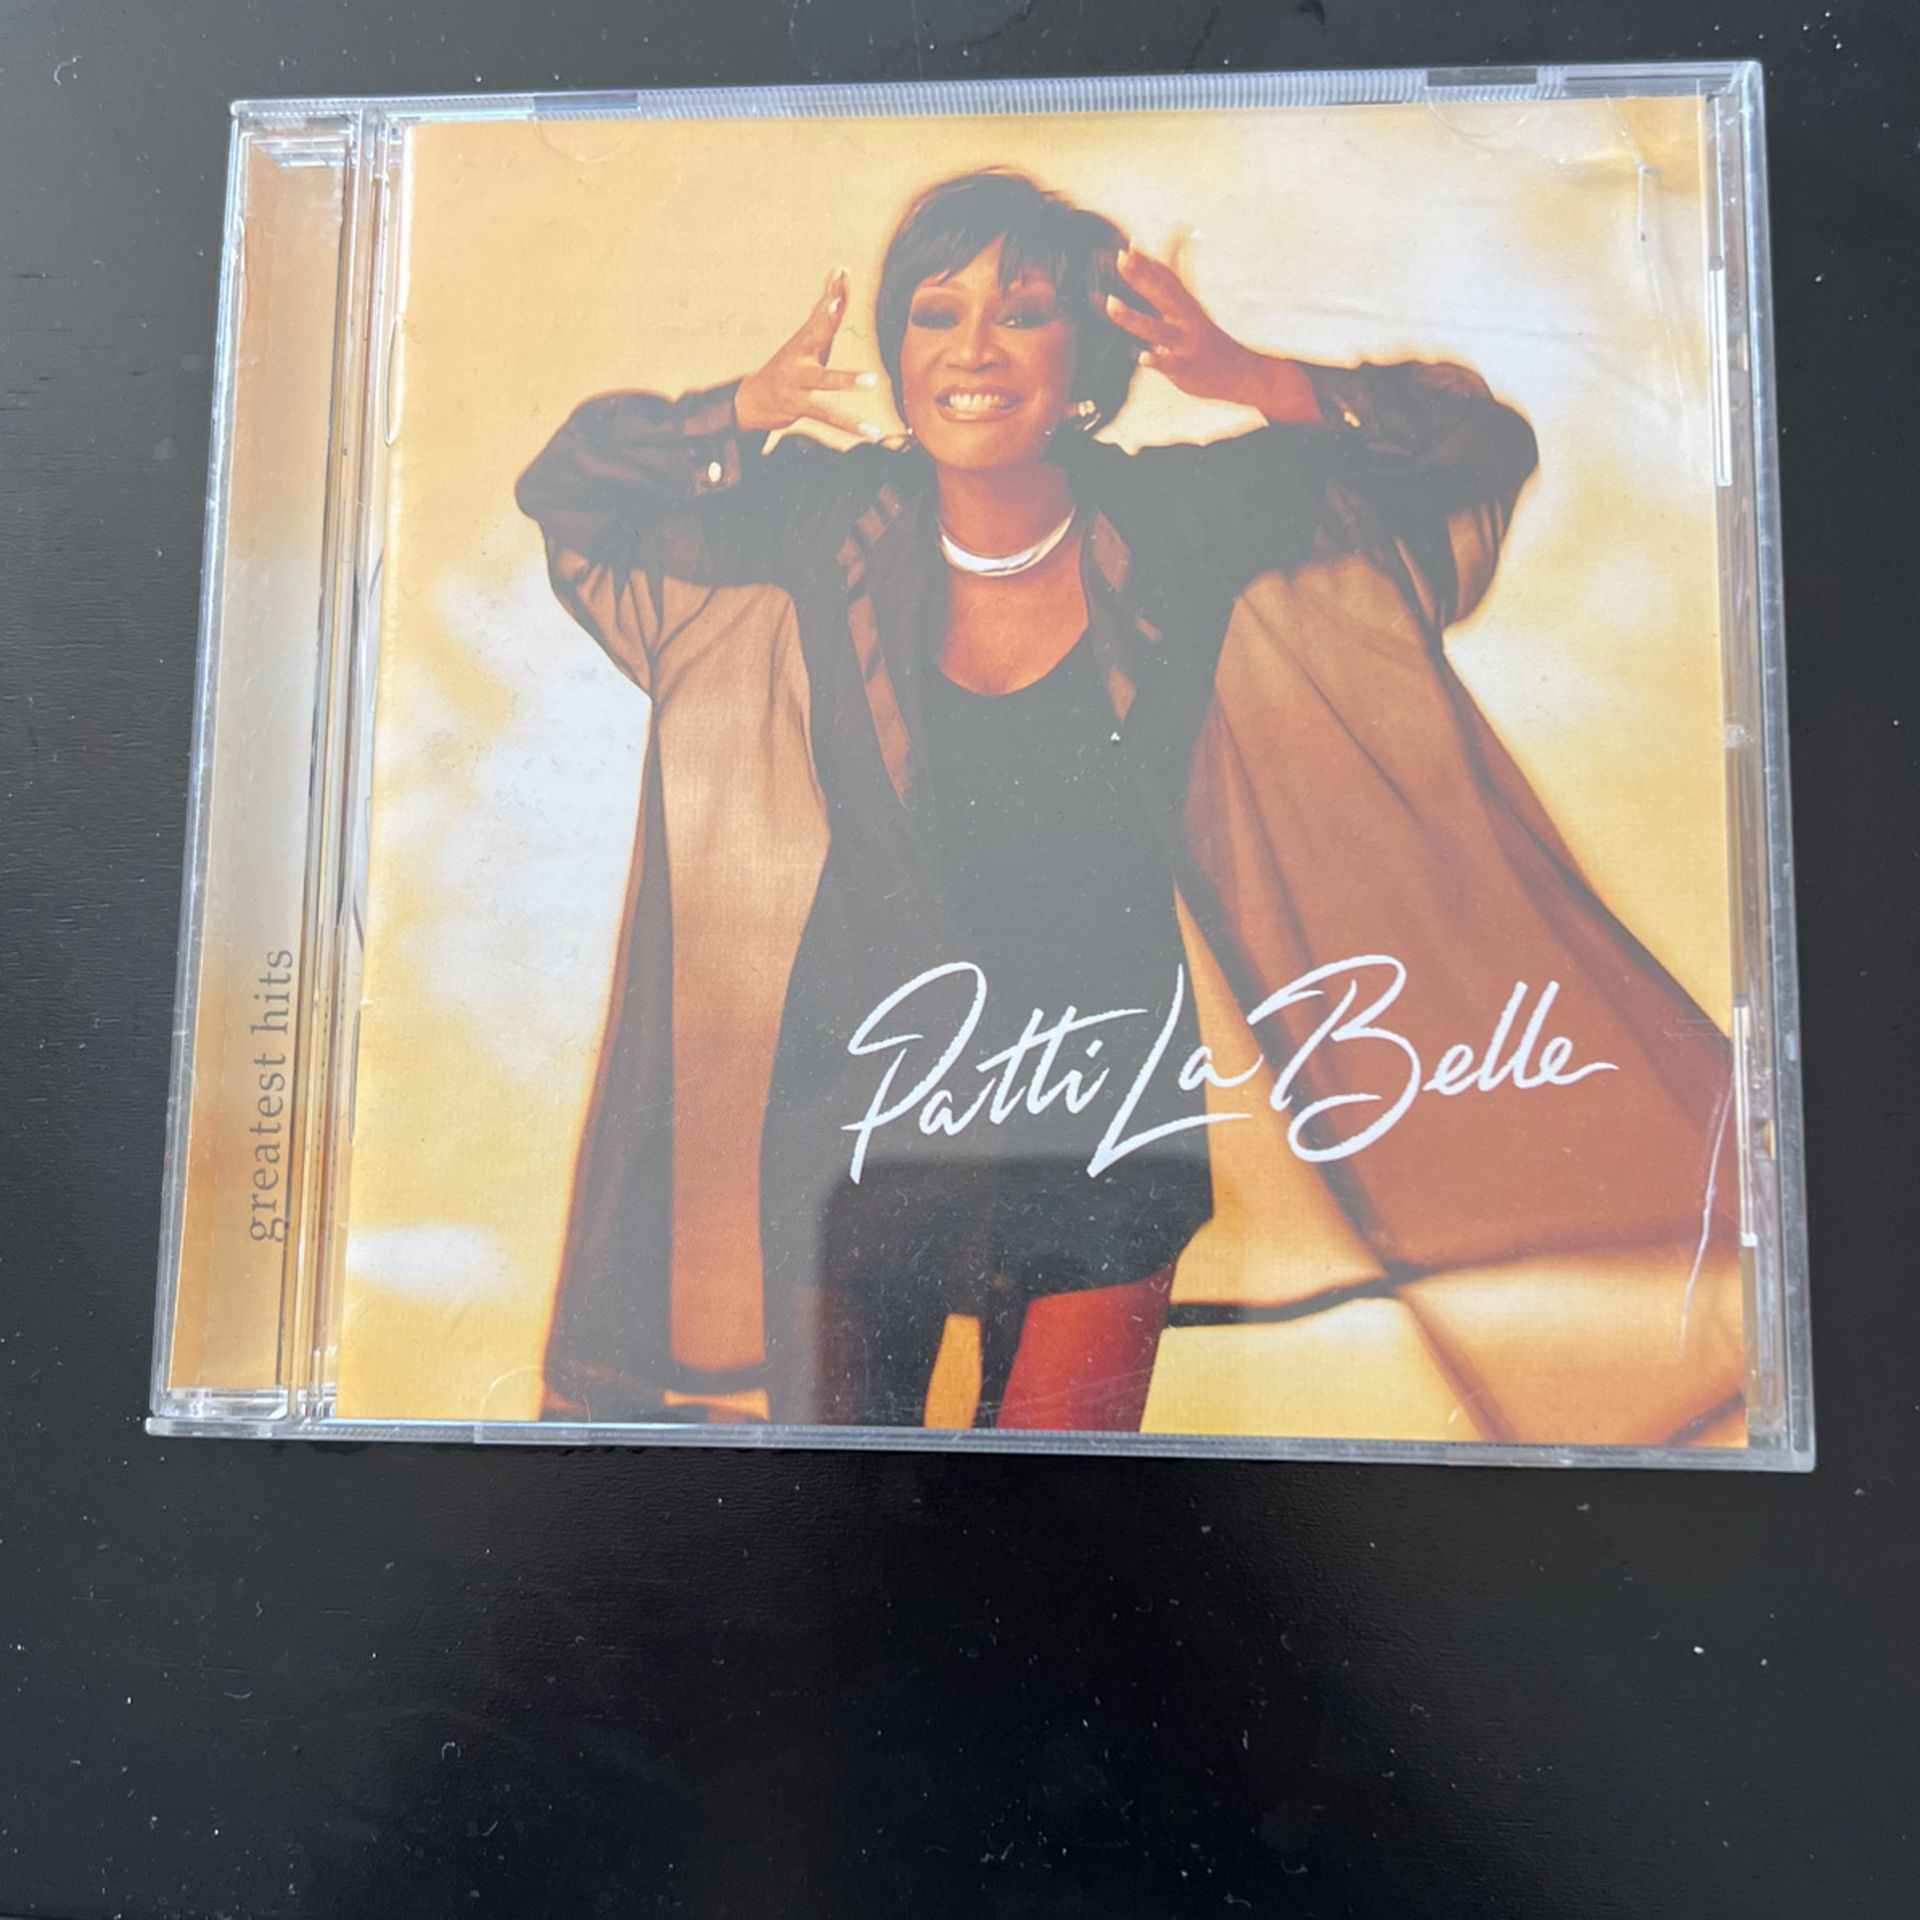 Patti Labelle Greatest Hits CD